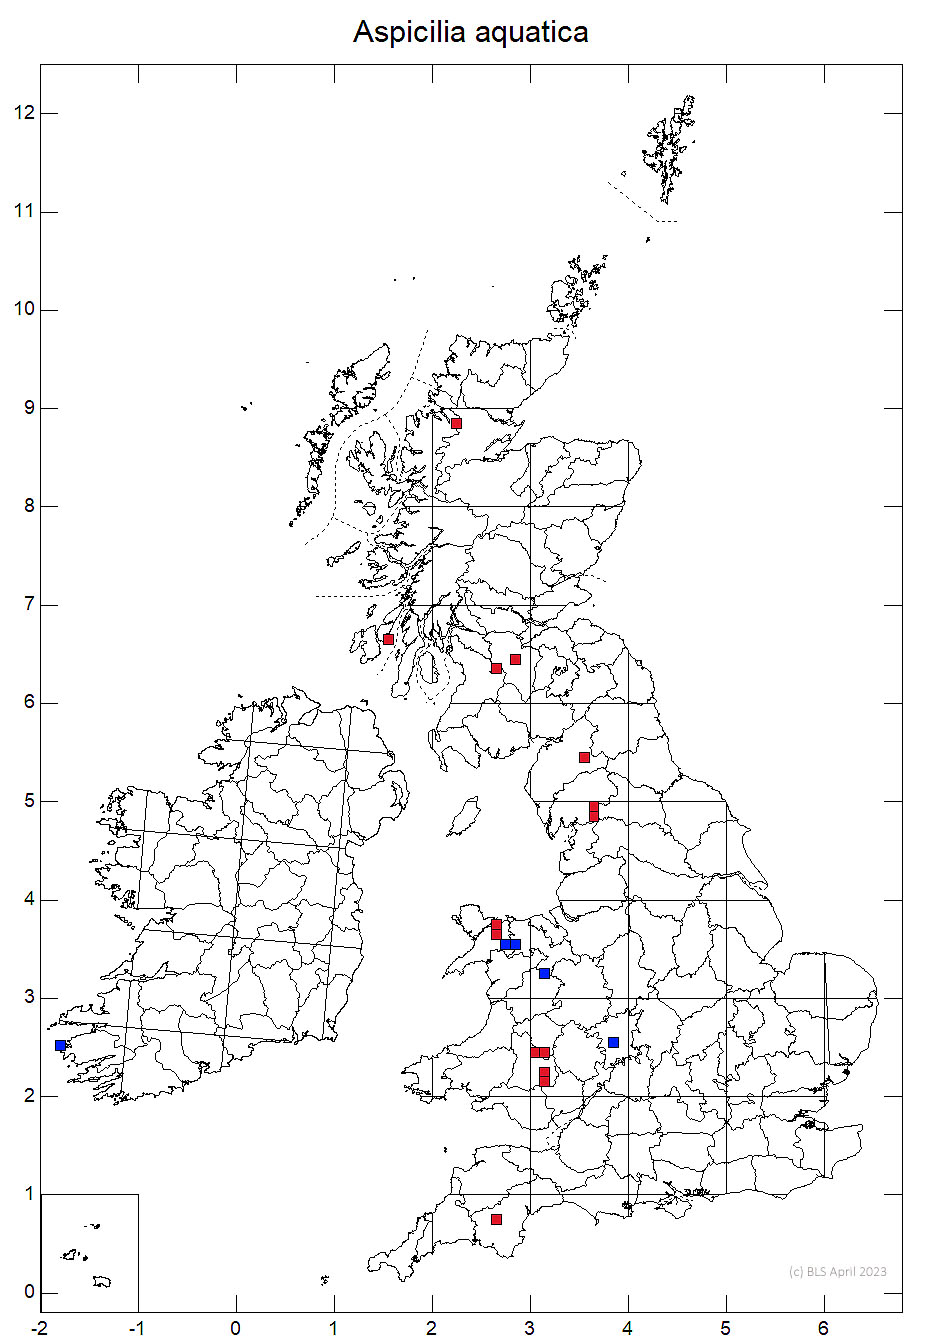 Aspicilia aquatica 10km sq distribution map